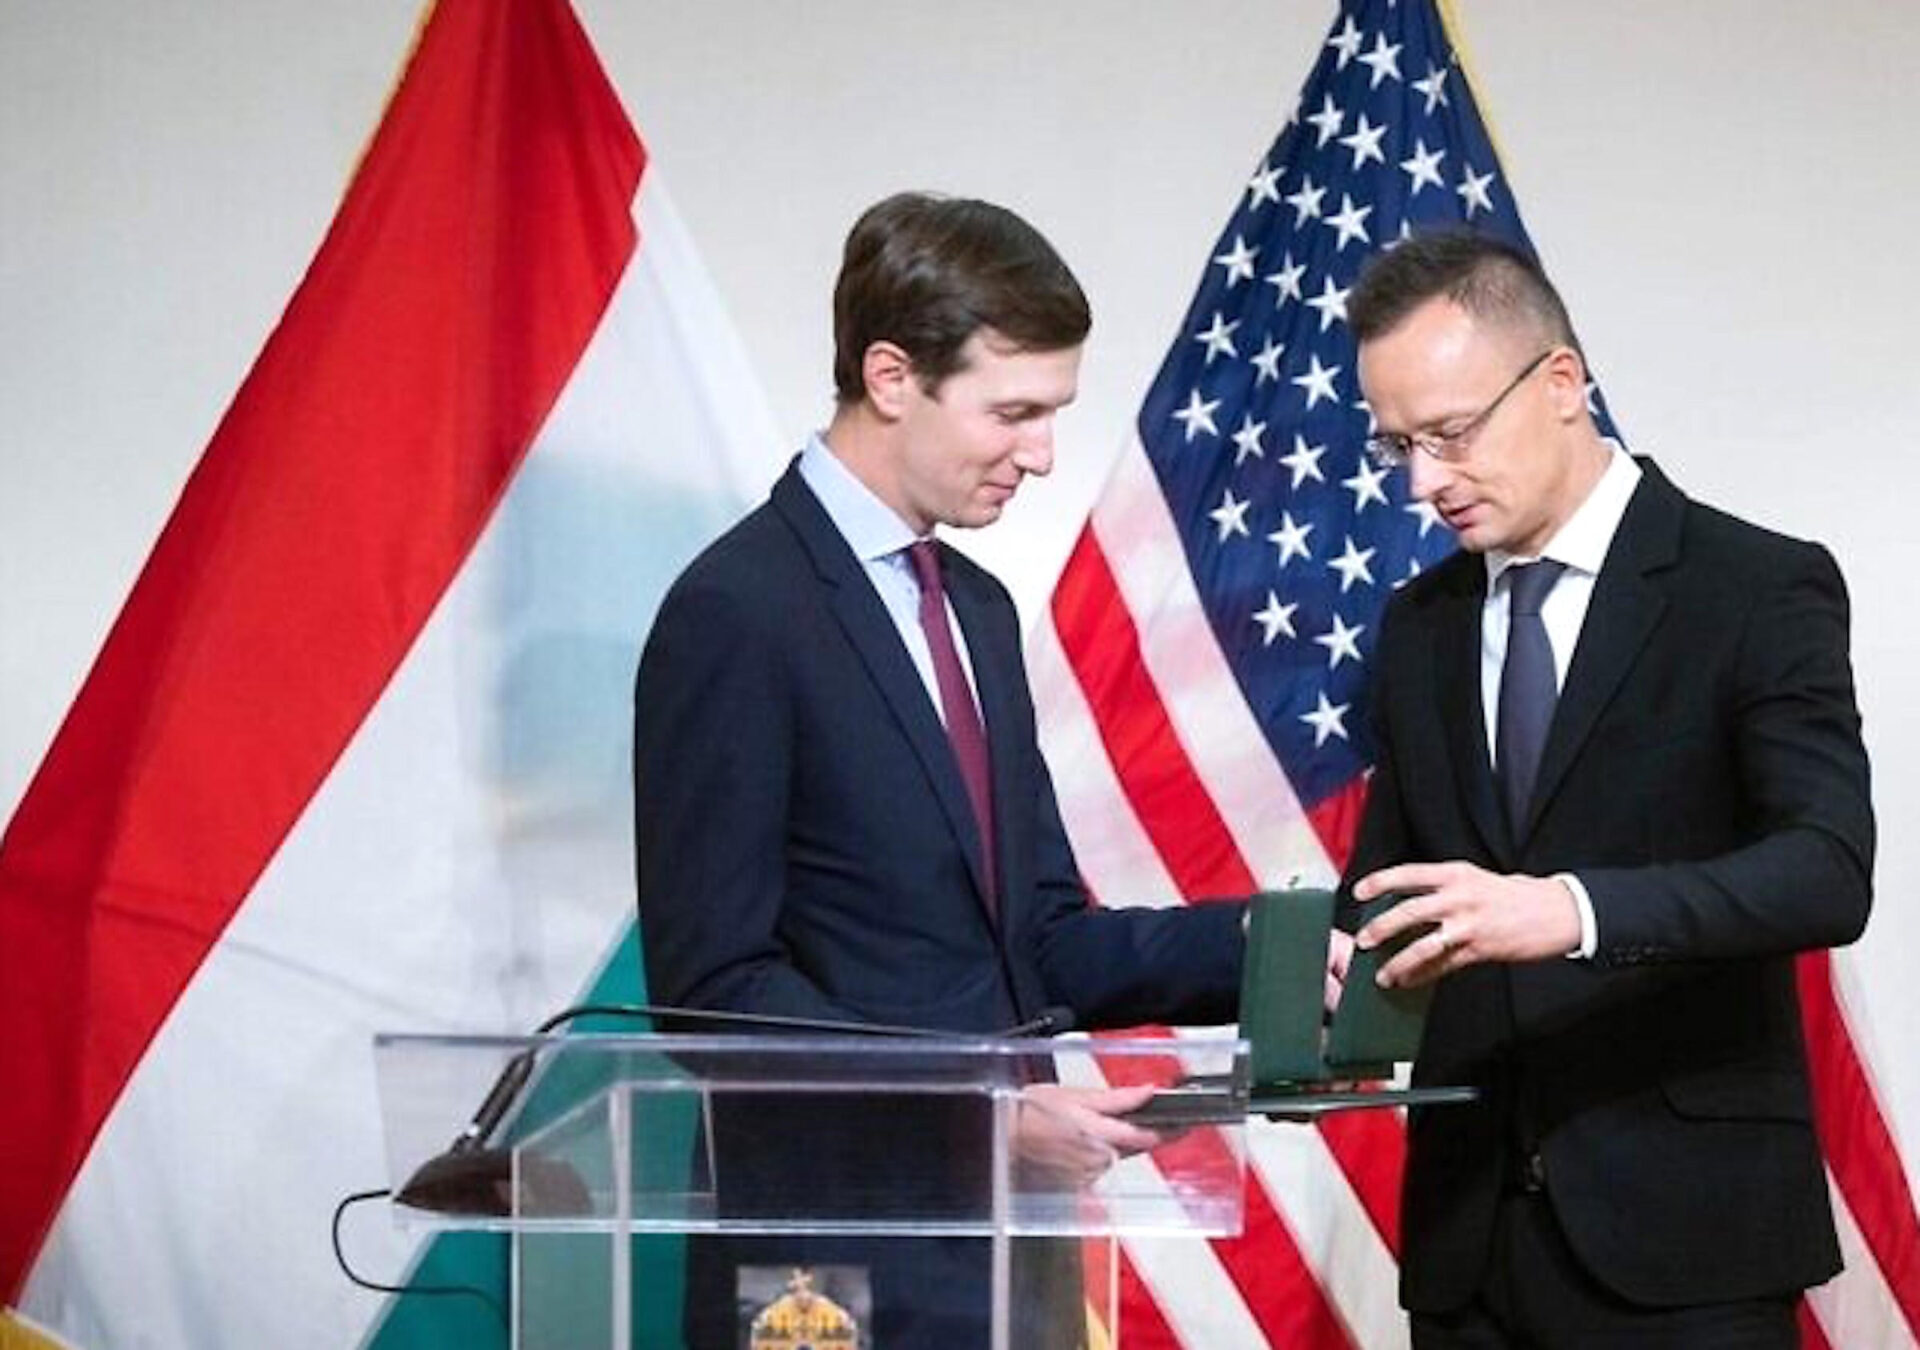 Hungary bestows a high honor on Jared Kushner